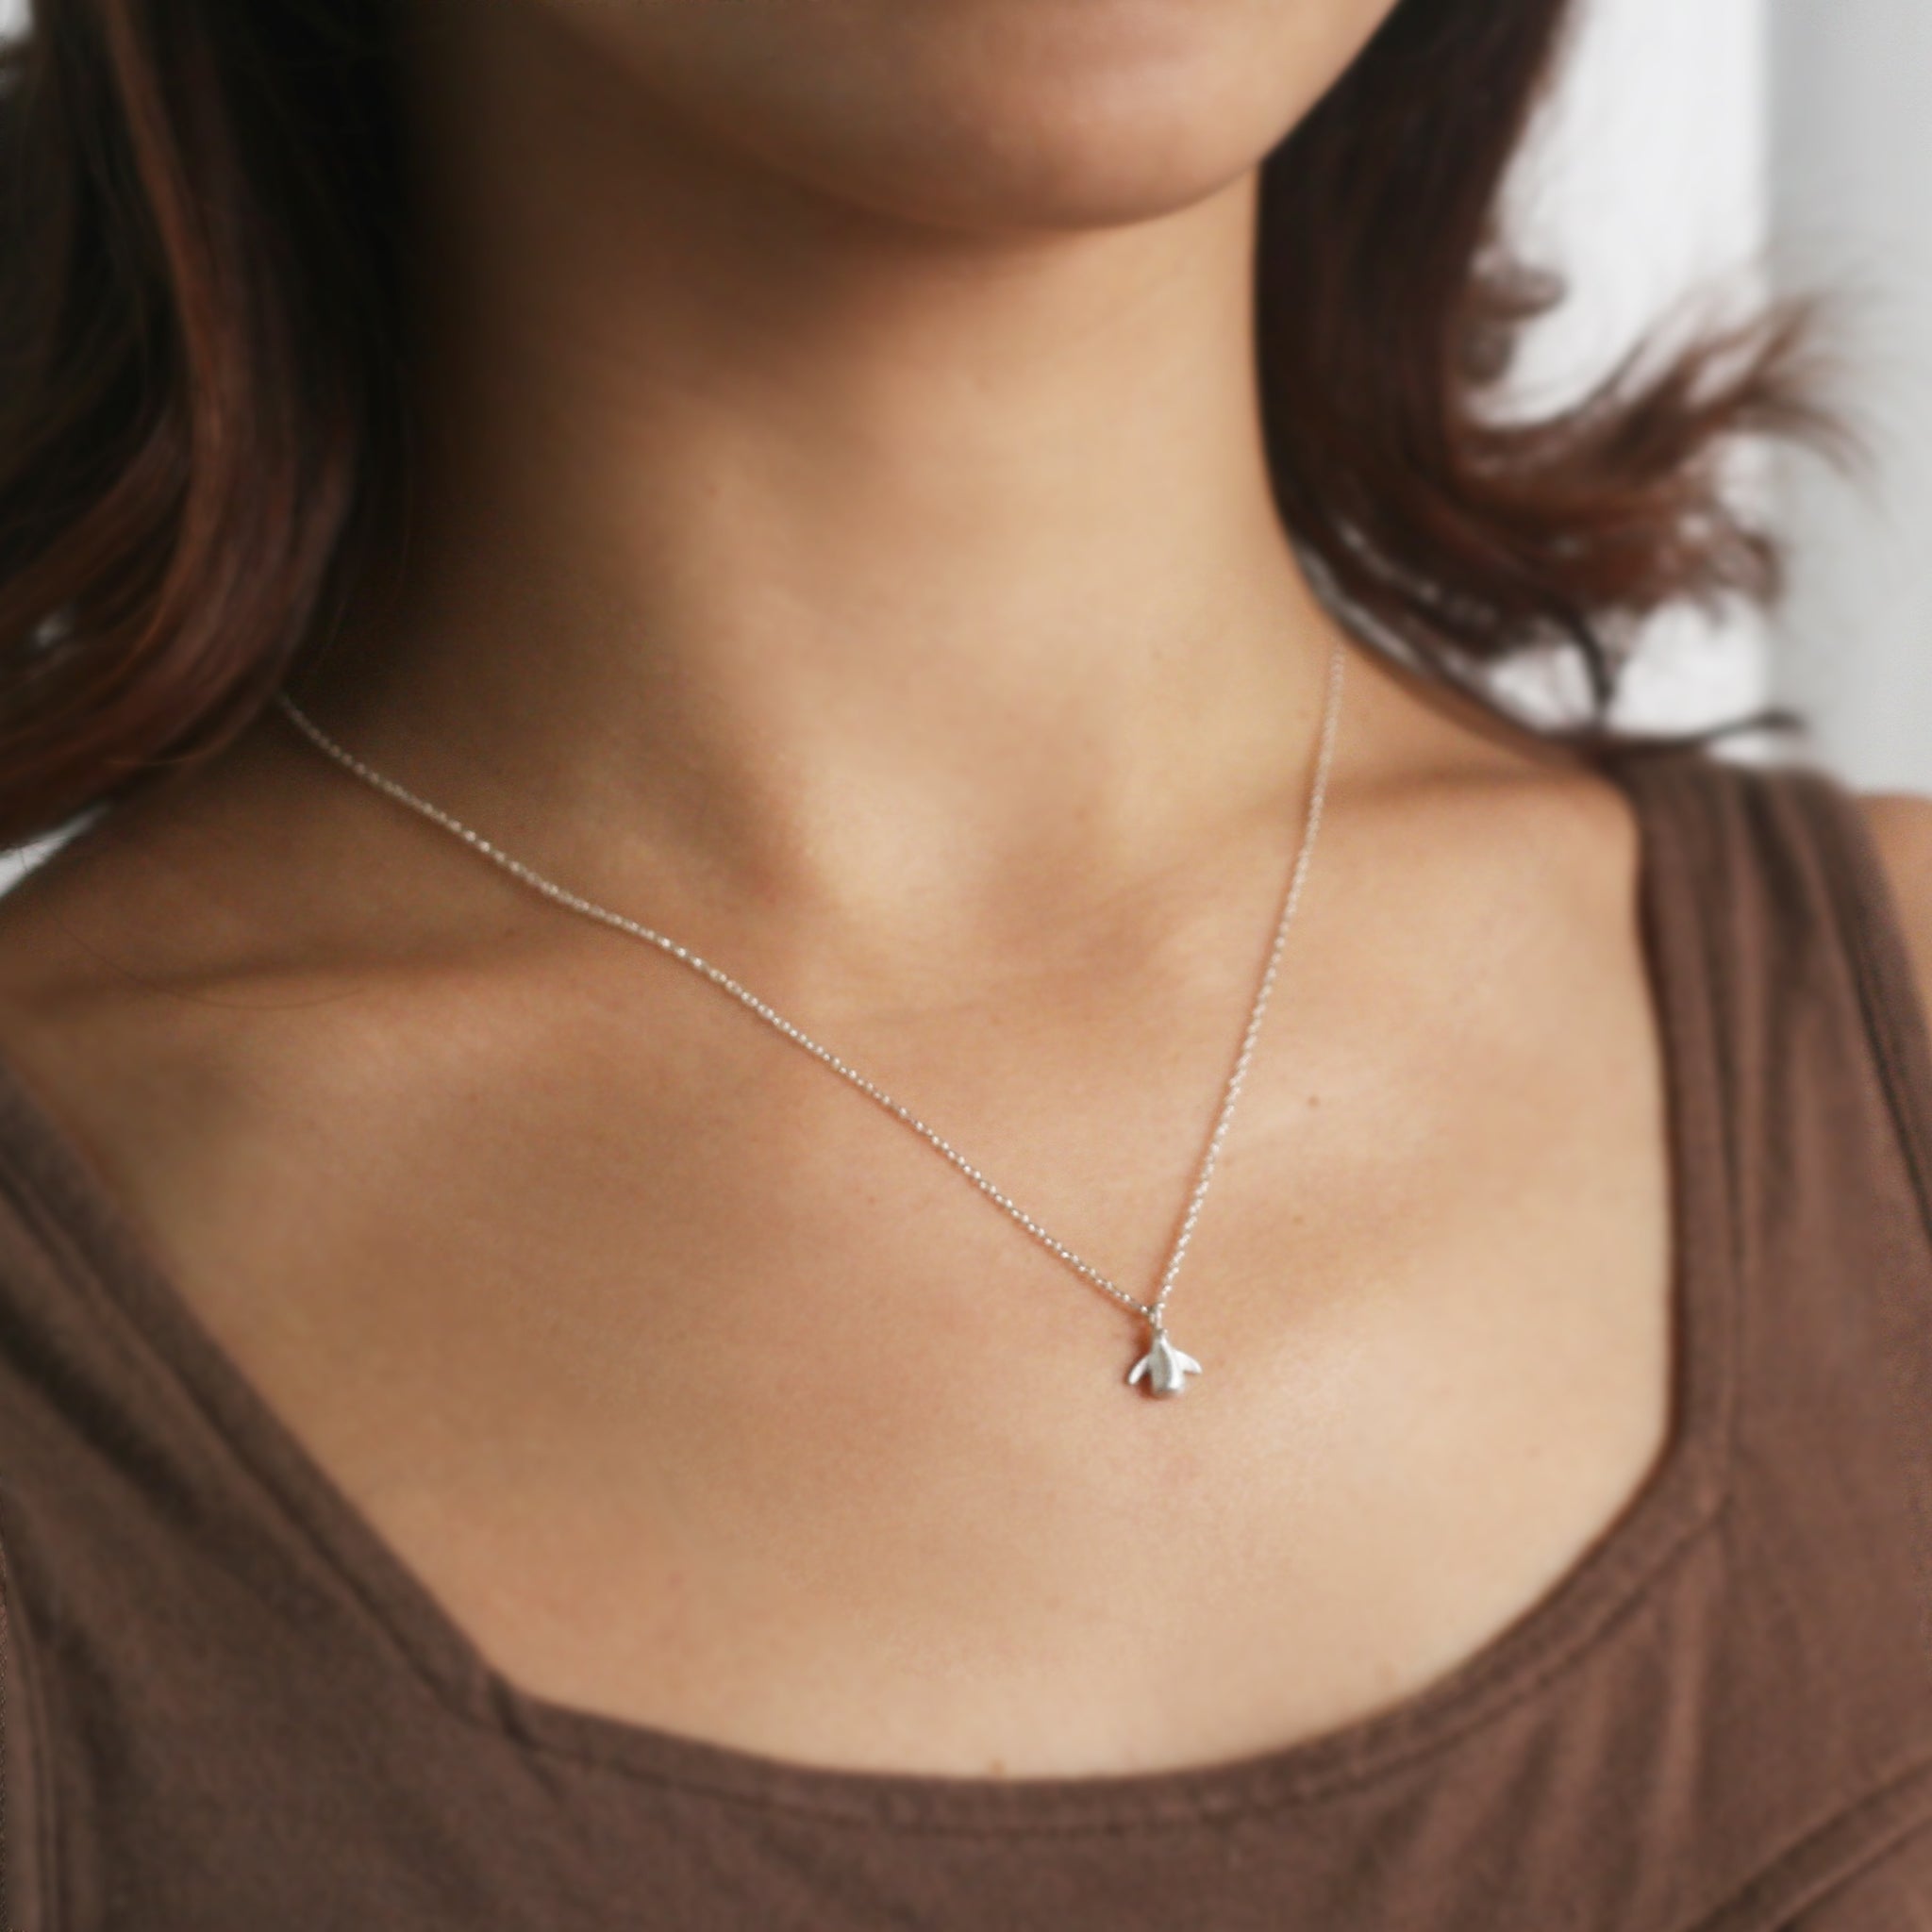 Penguin Pendant Necklace for Womens 14k White Gold Over Sterling Silver -  Walmart.com